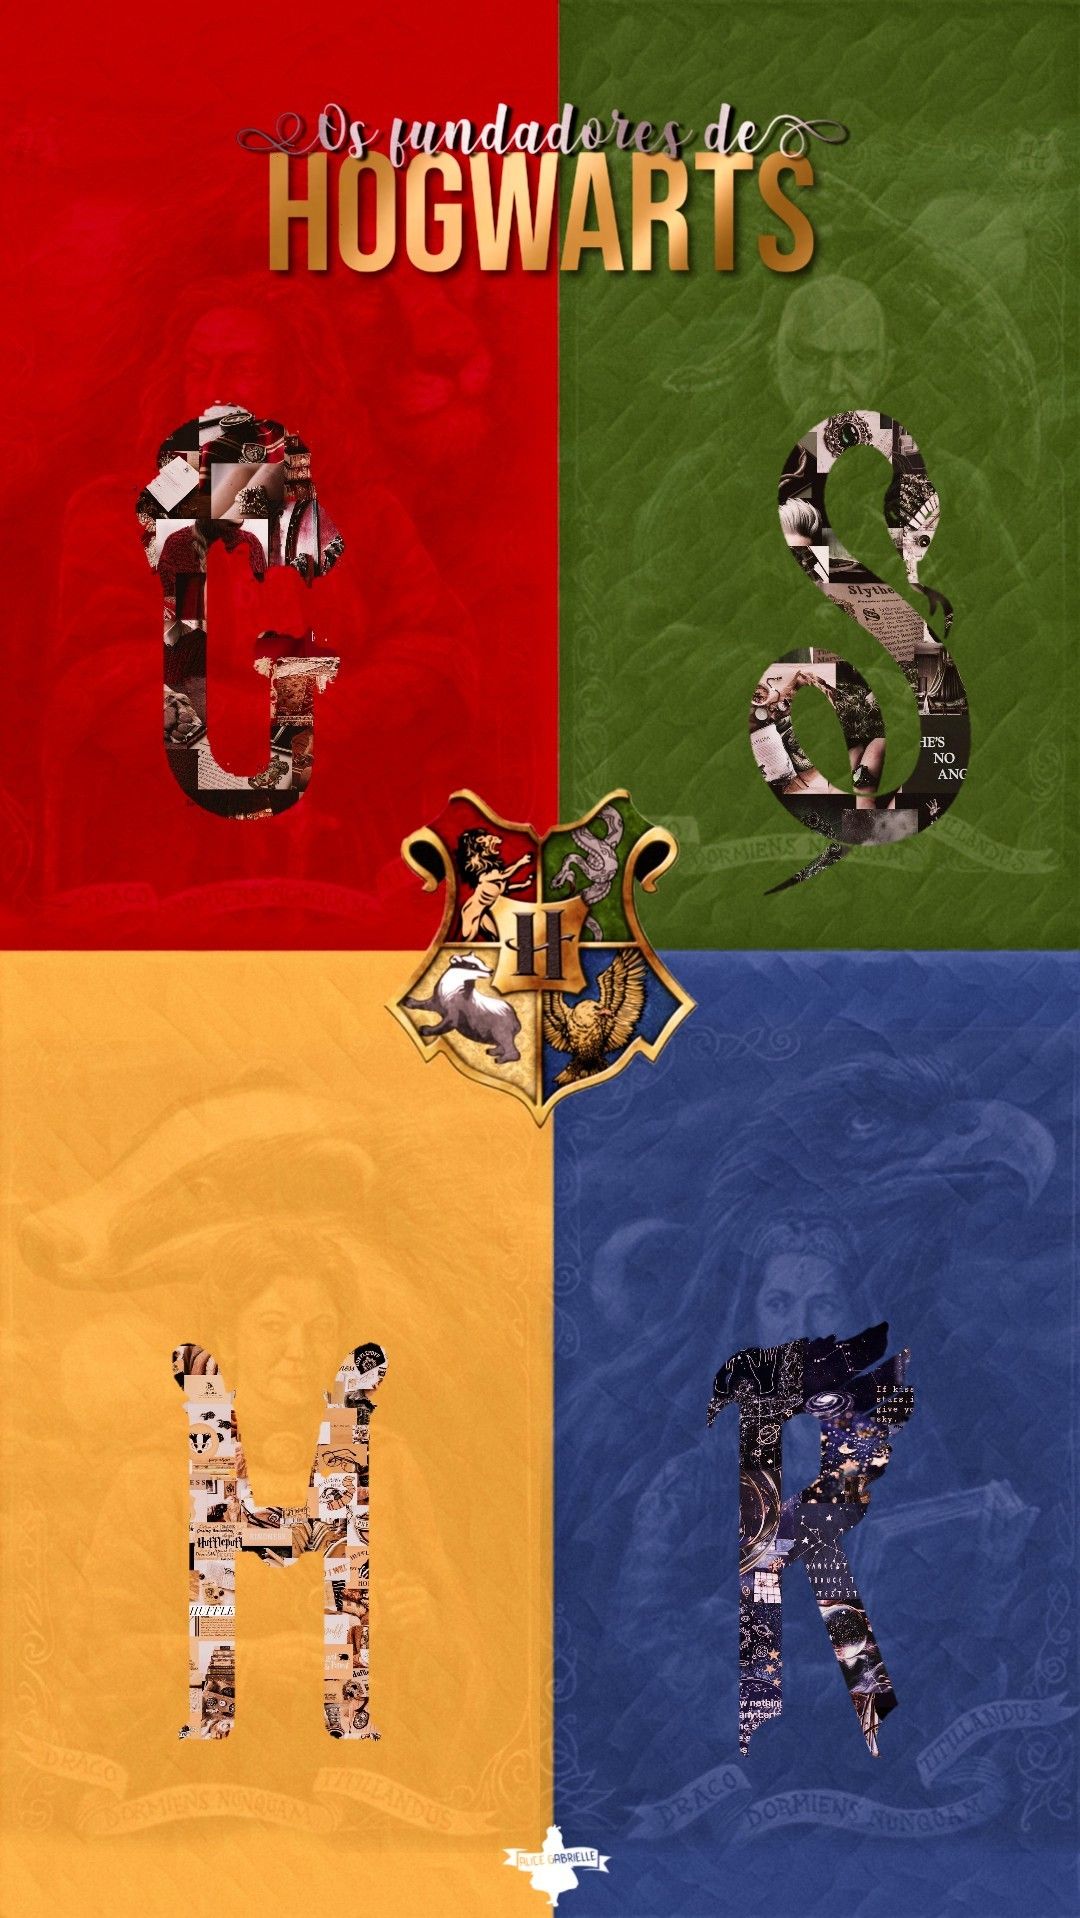 Âââïââ the founders of hogwarts